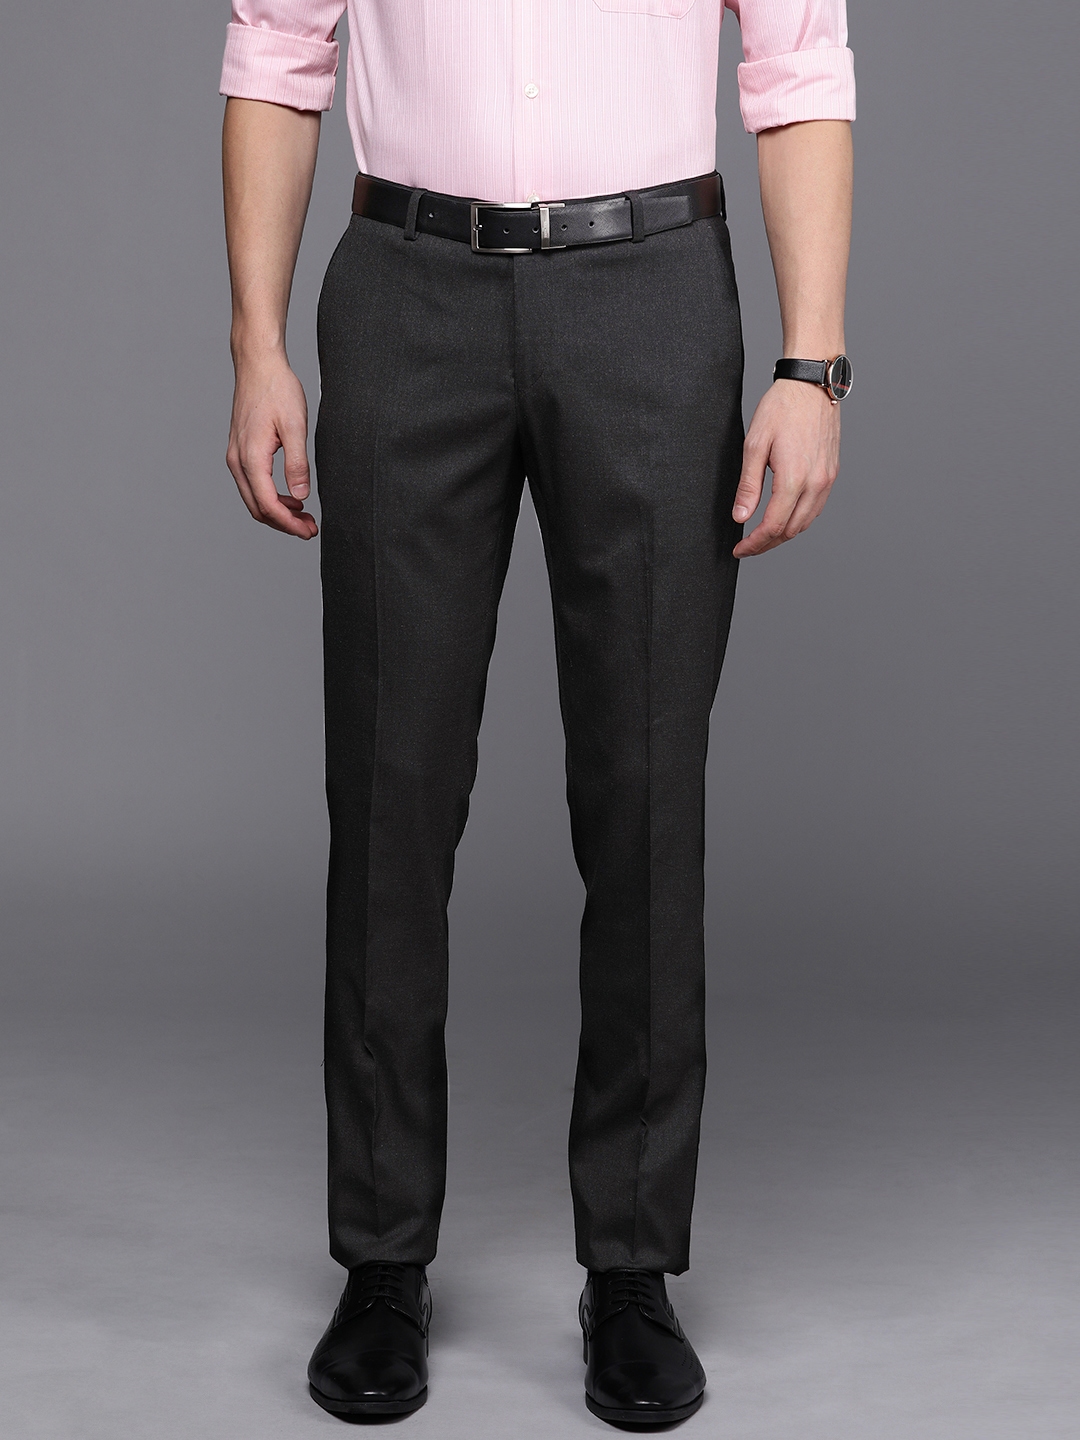 Buy SUITLTD Men Black Slim Fit Solid Formal Trousers - Trousers for Men ...